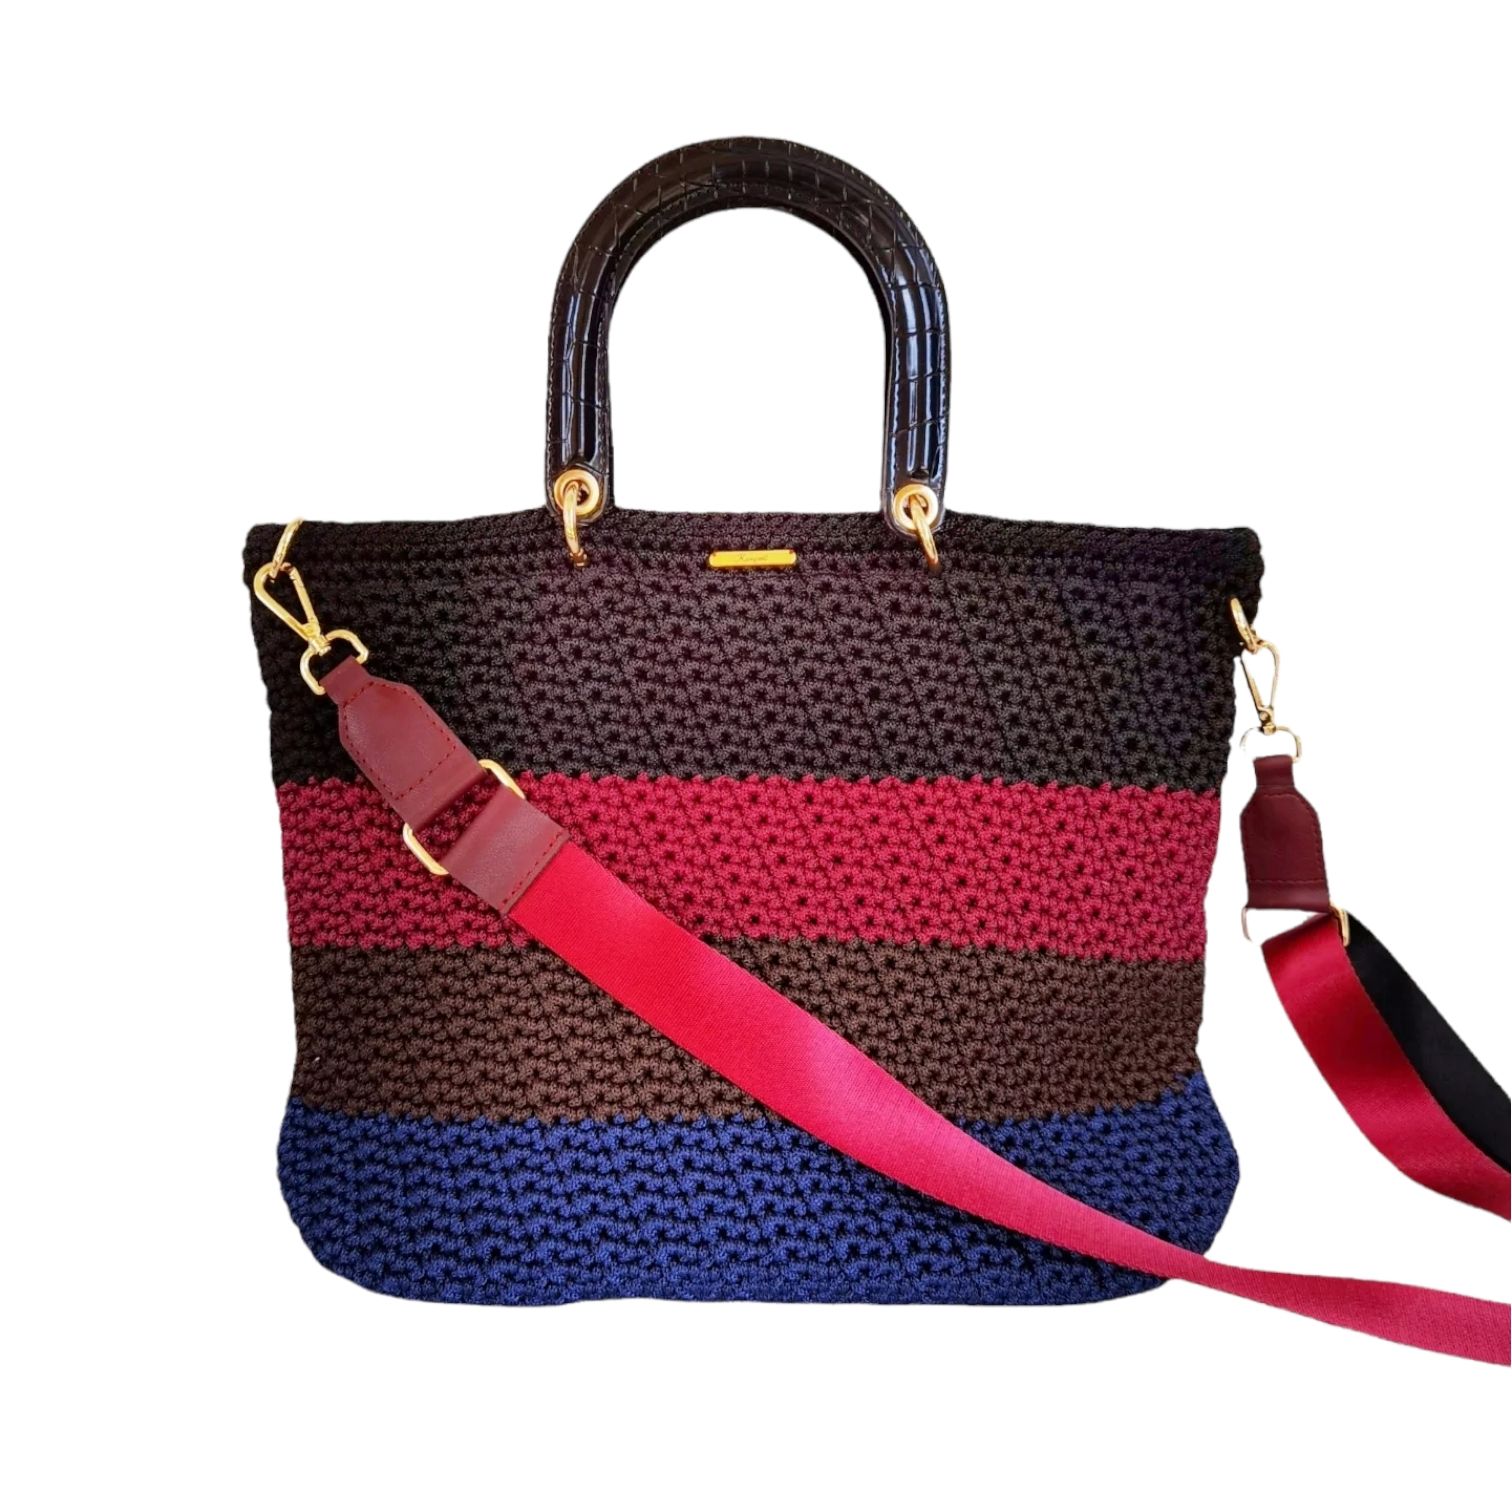 Custommade: "Μελίτα" tote bag με 4 χρώματα (μαύρο - μπλε - κόκκινο - καφέ)